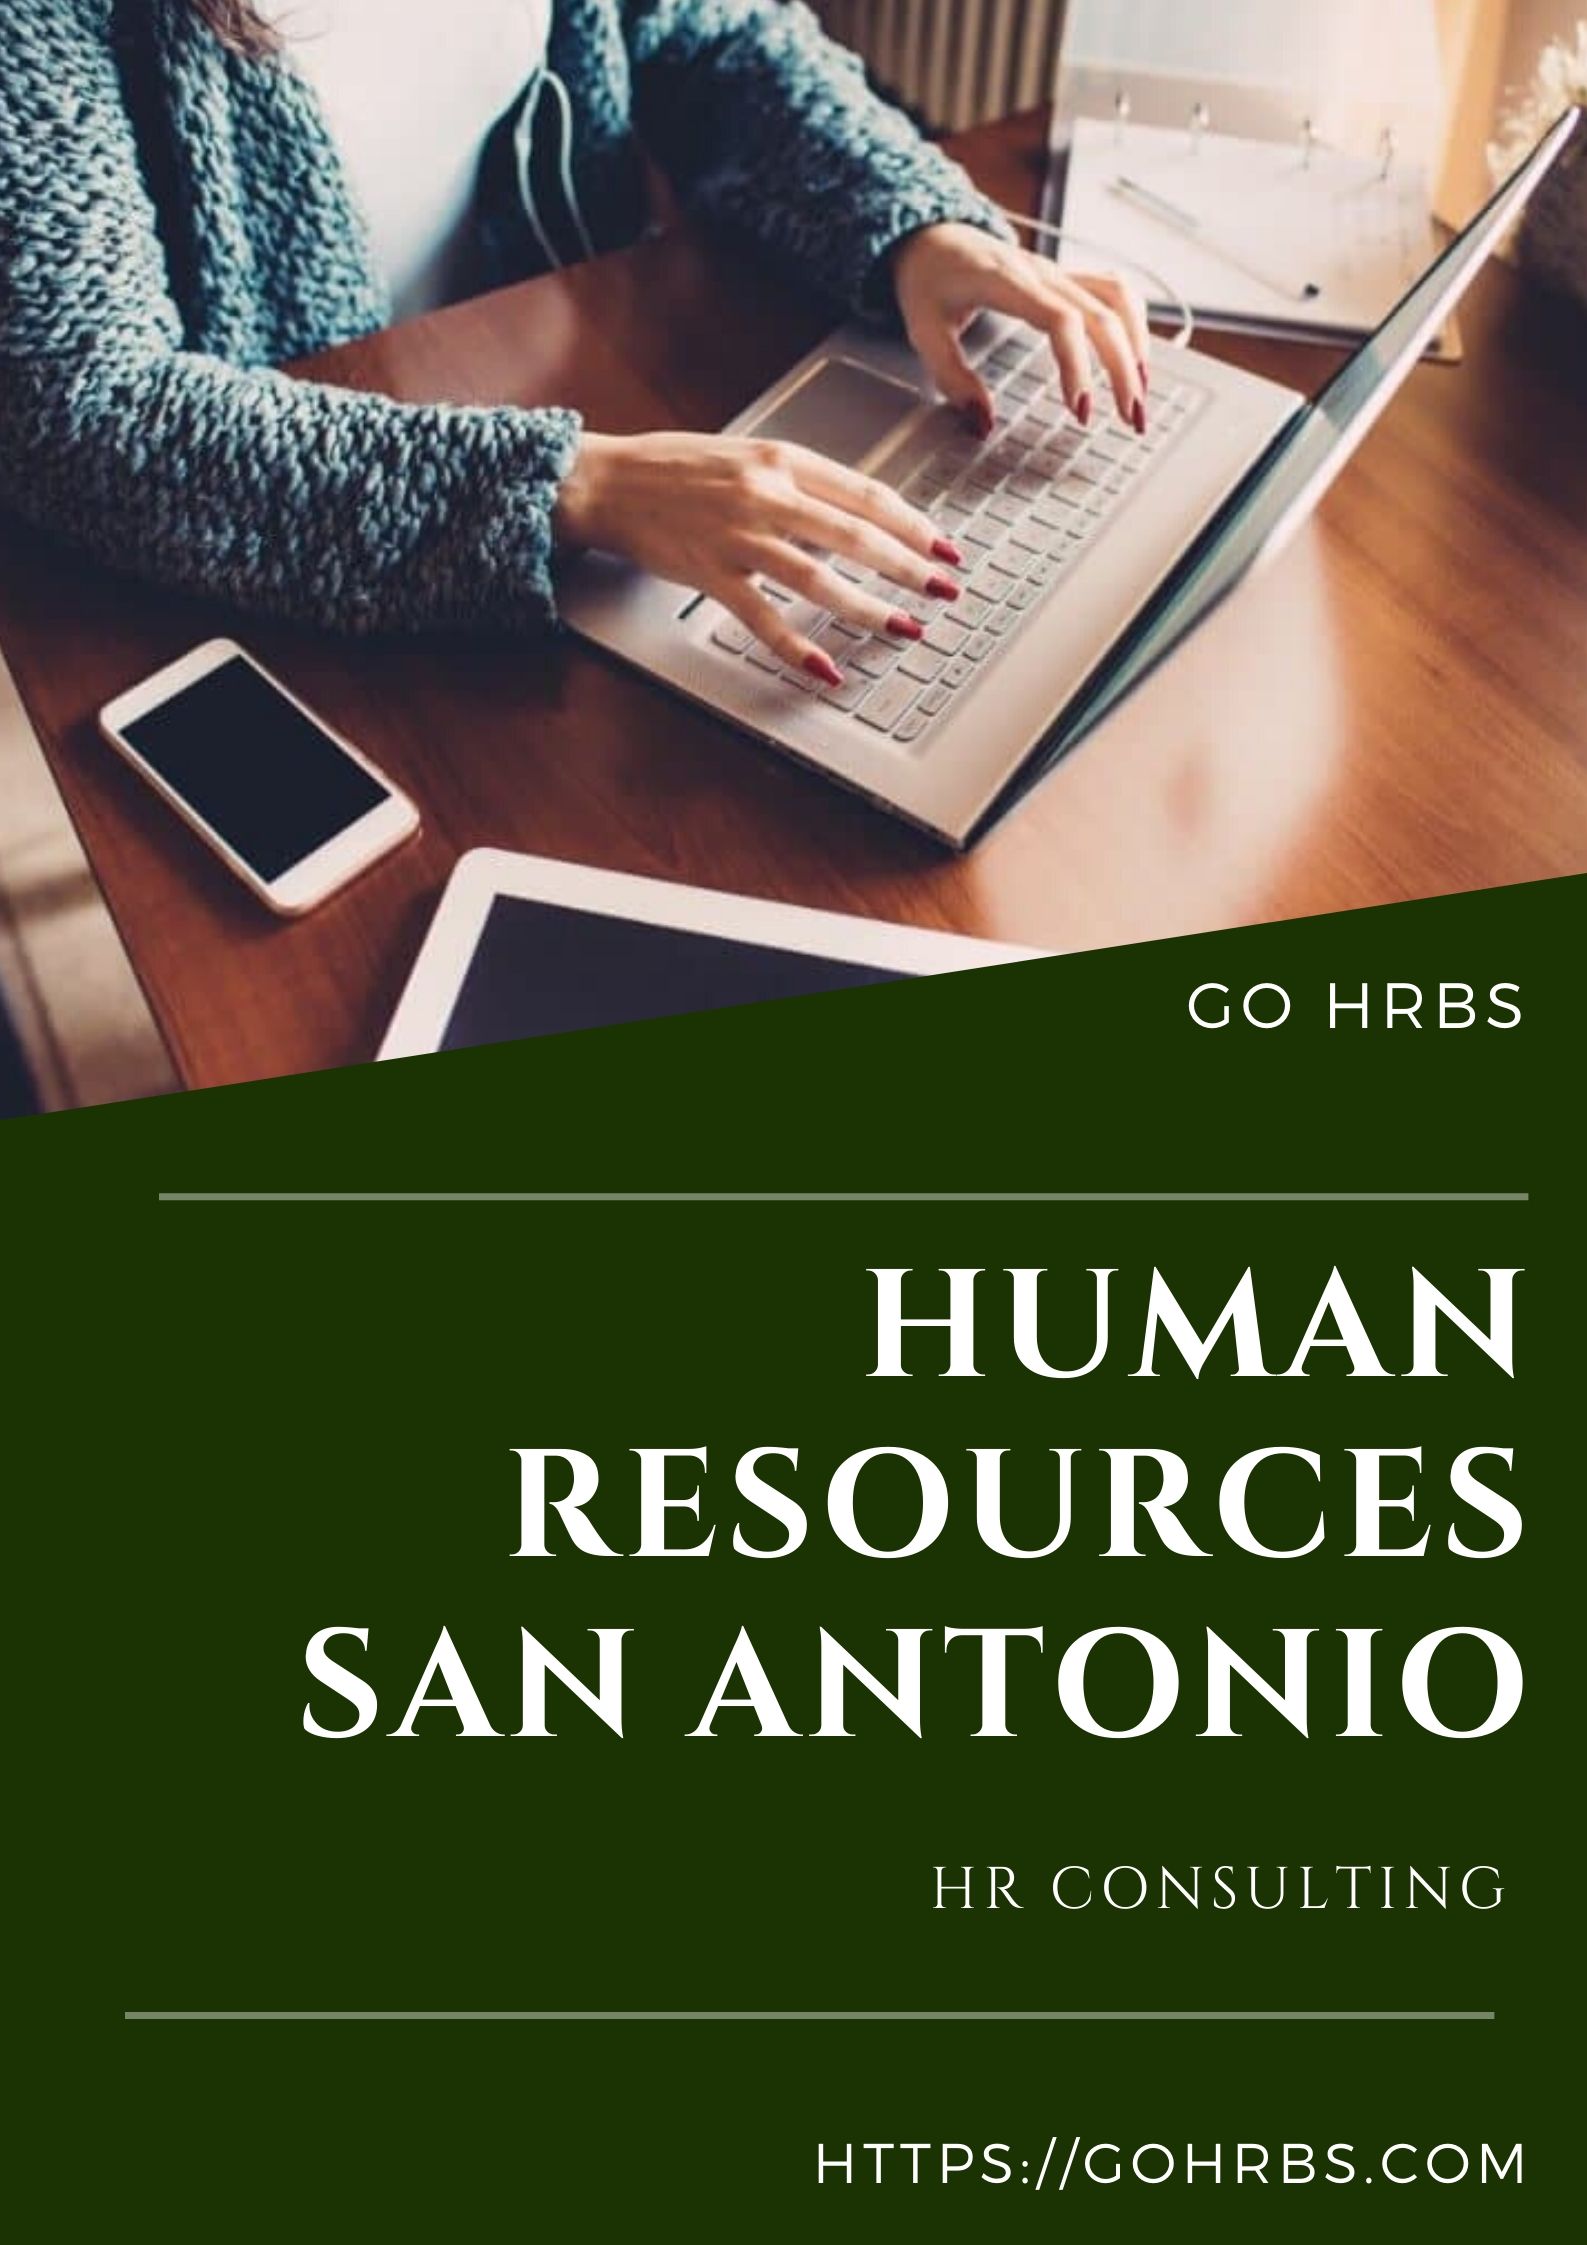 Human Resources San Antonio - GO HRBS.jpg  by gohrbusinesssolutions